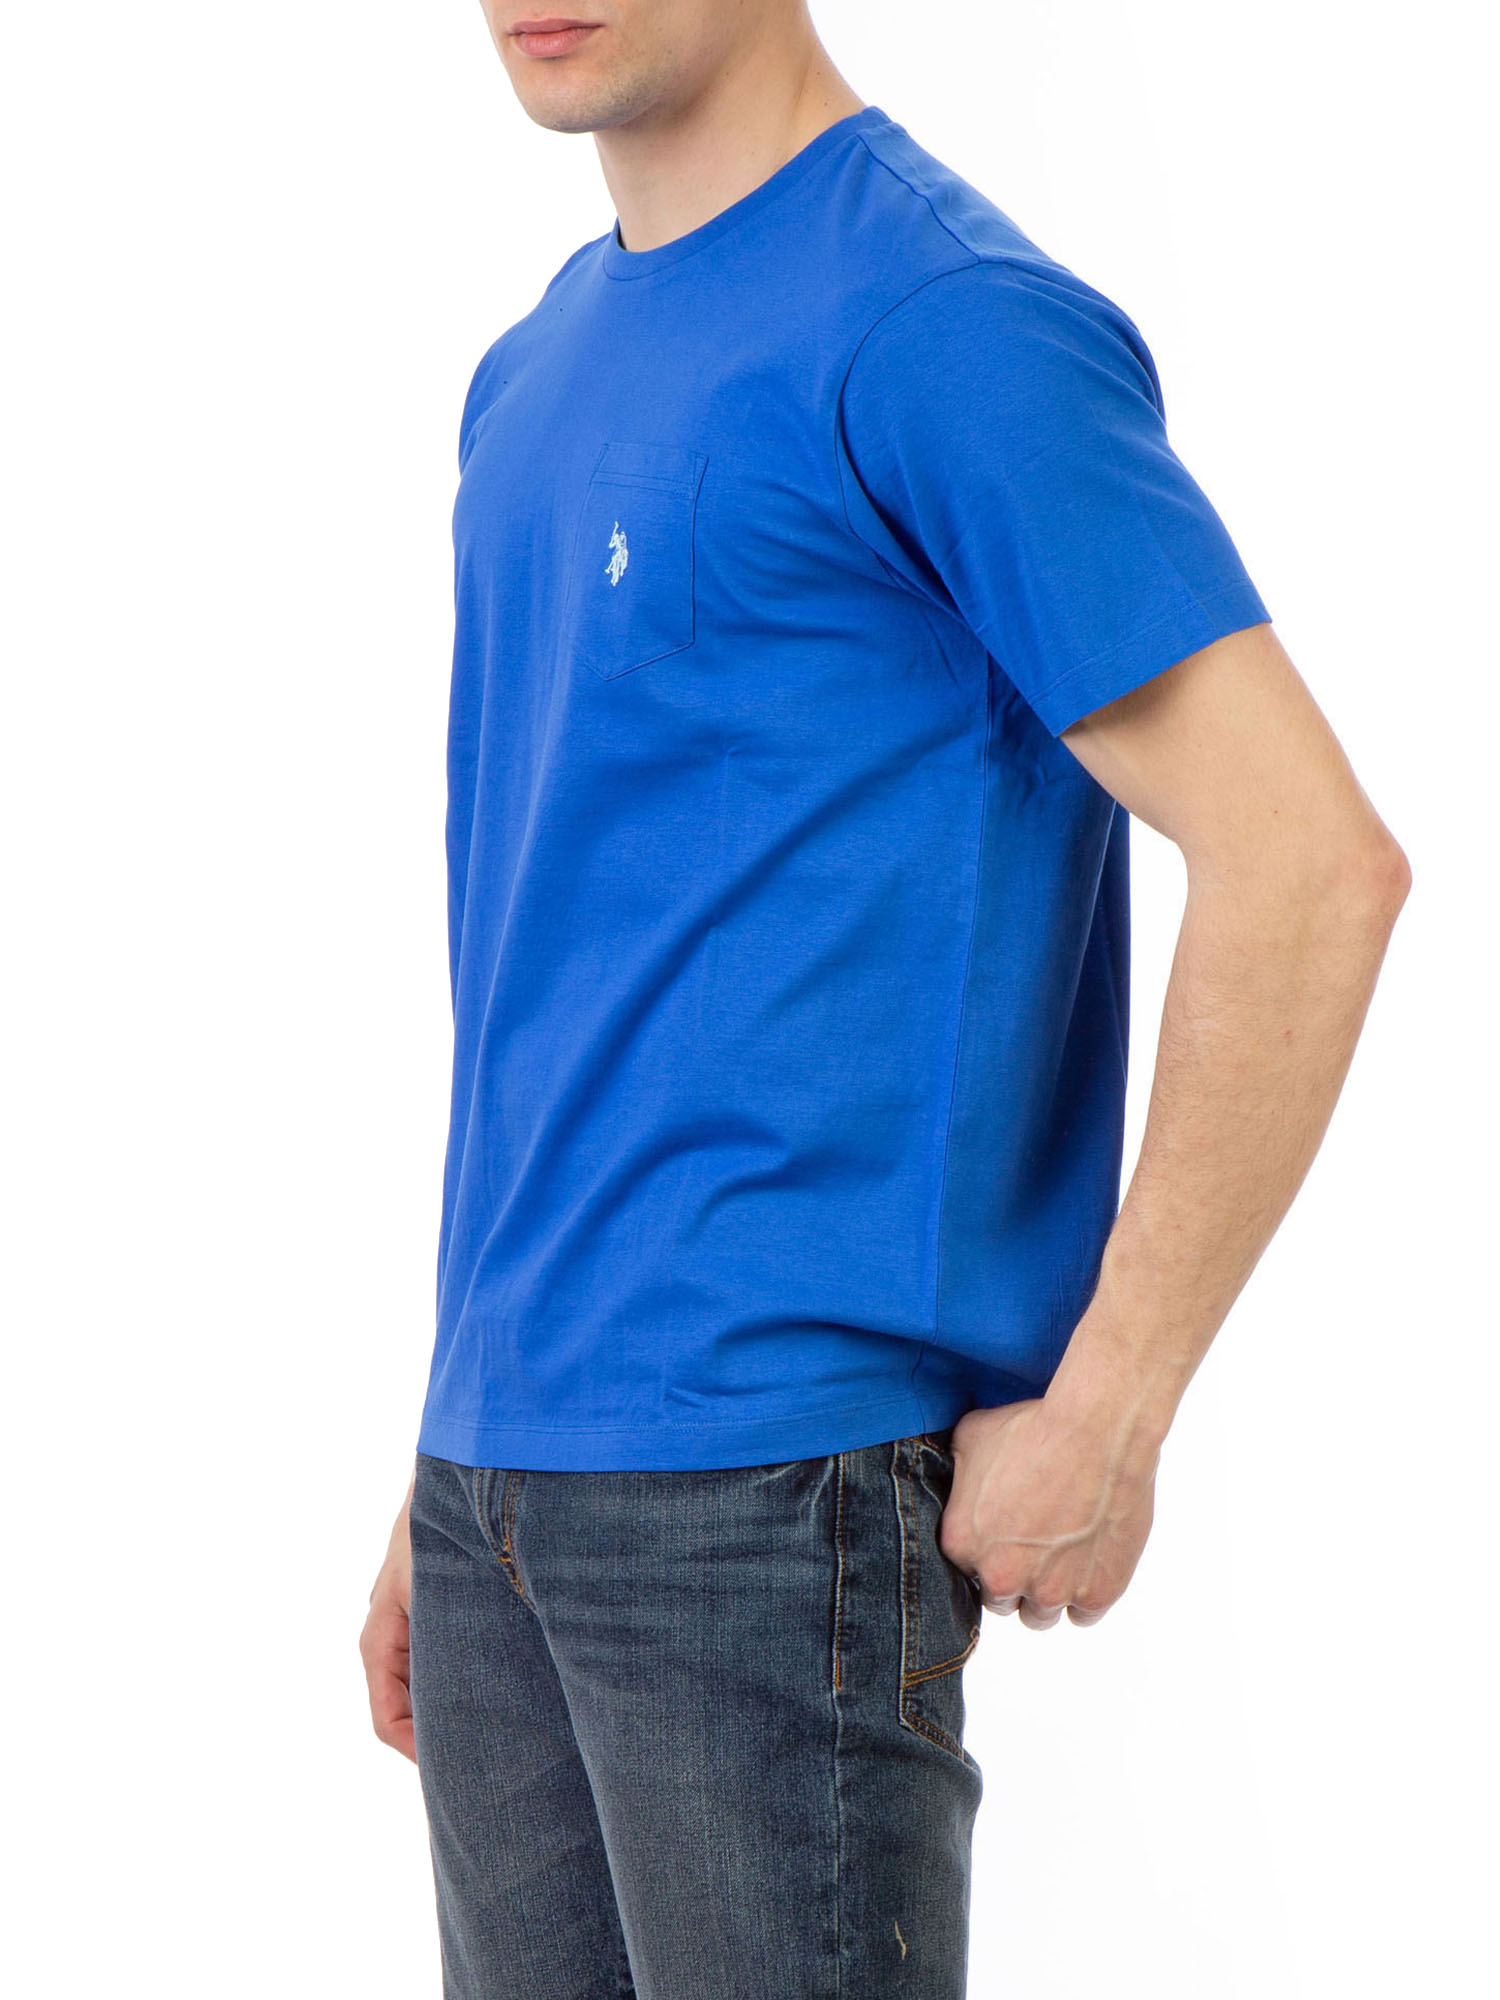 U.S. Polo Assn. Men's Pocket Knit T-Shirt - image 3 of 3